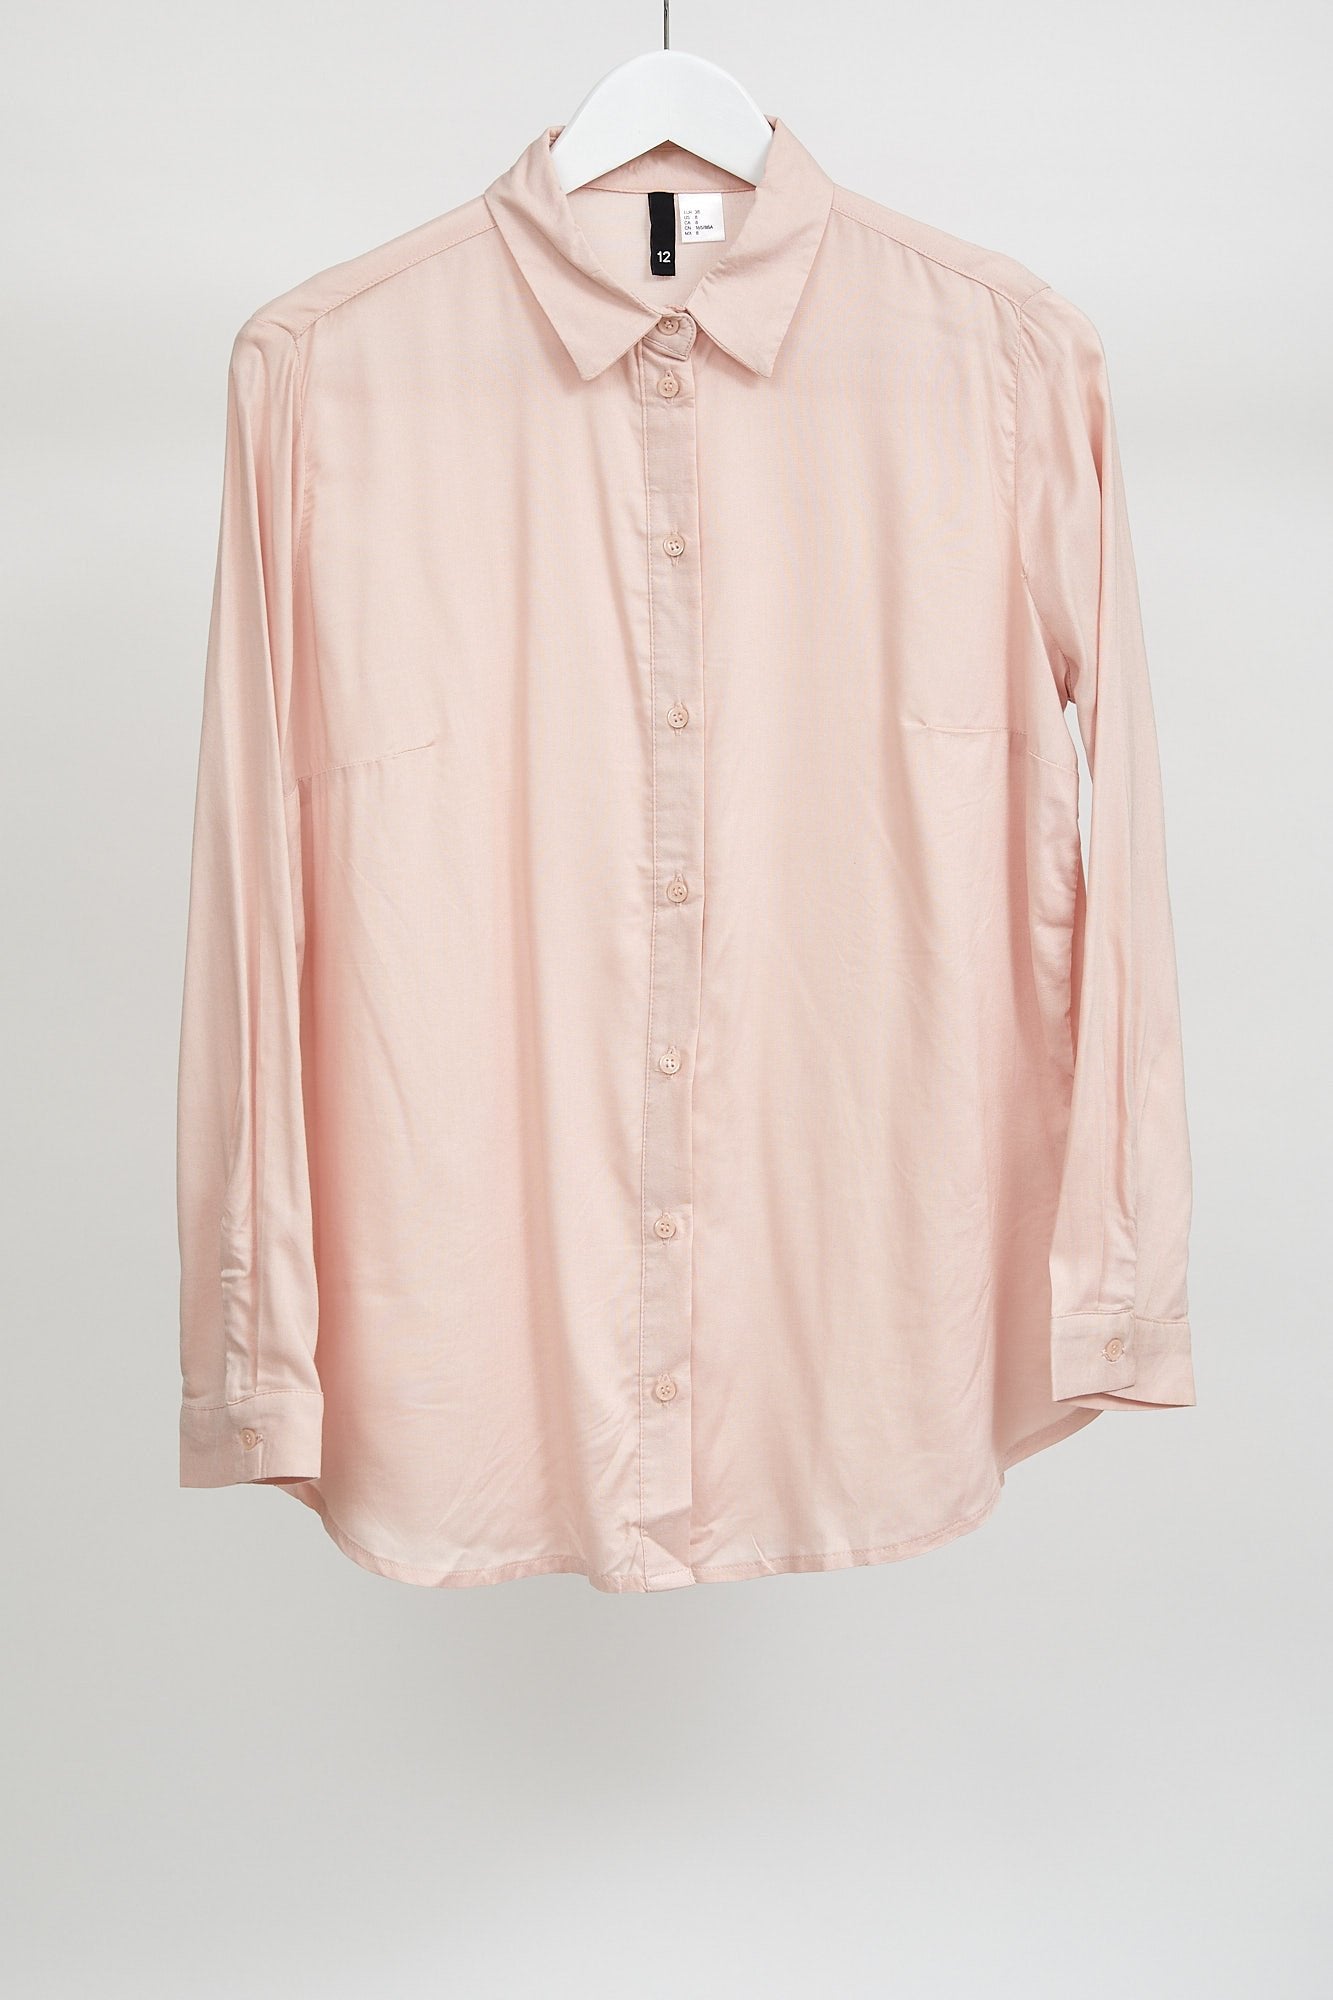 Womens H&M Pink shirt: Medium or 12